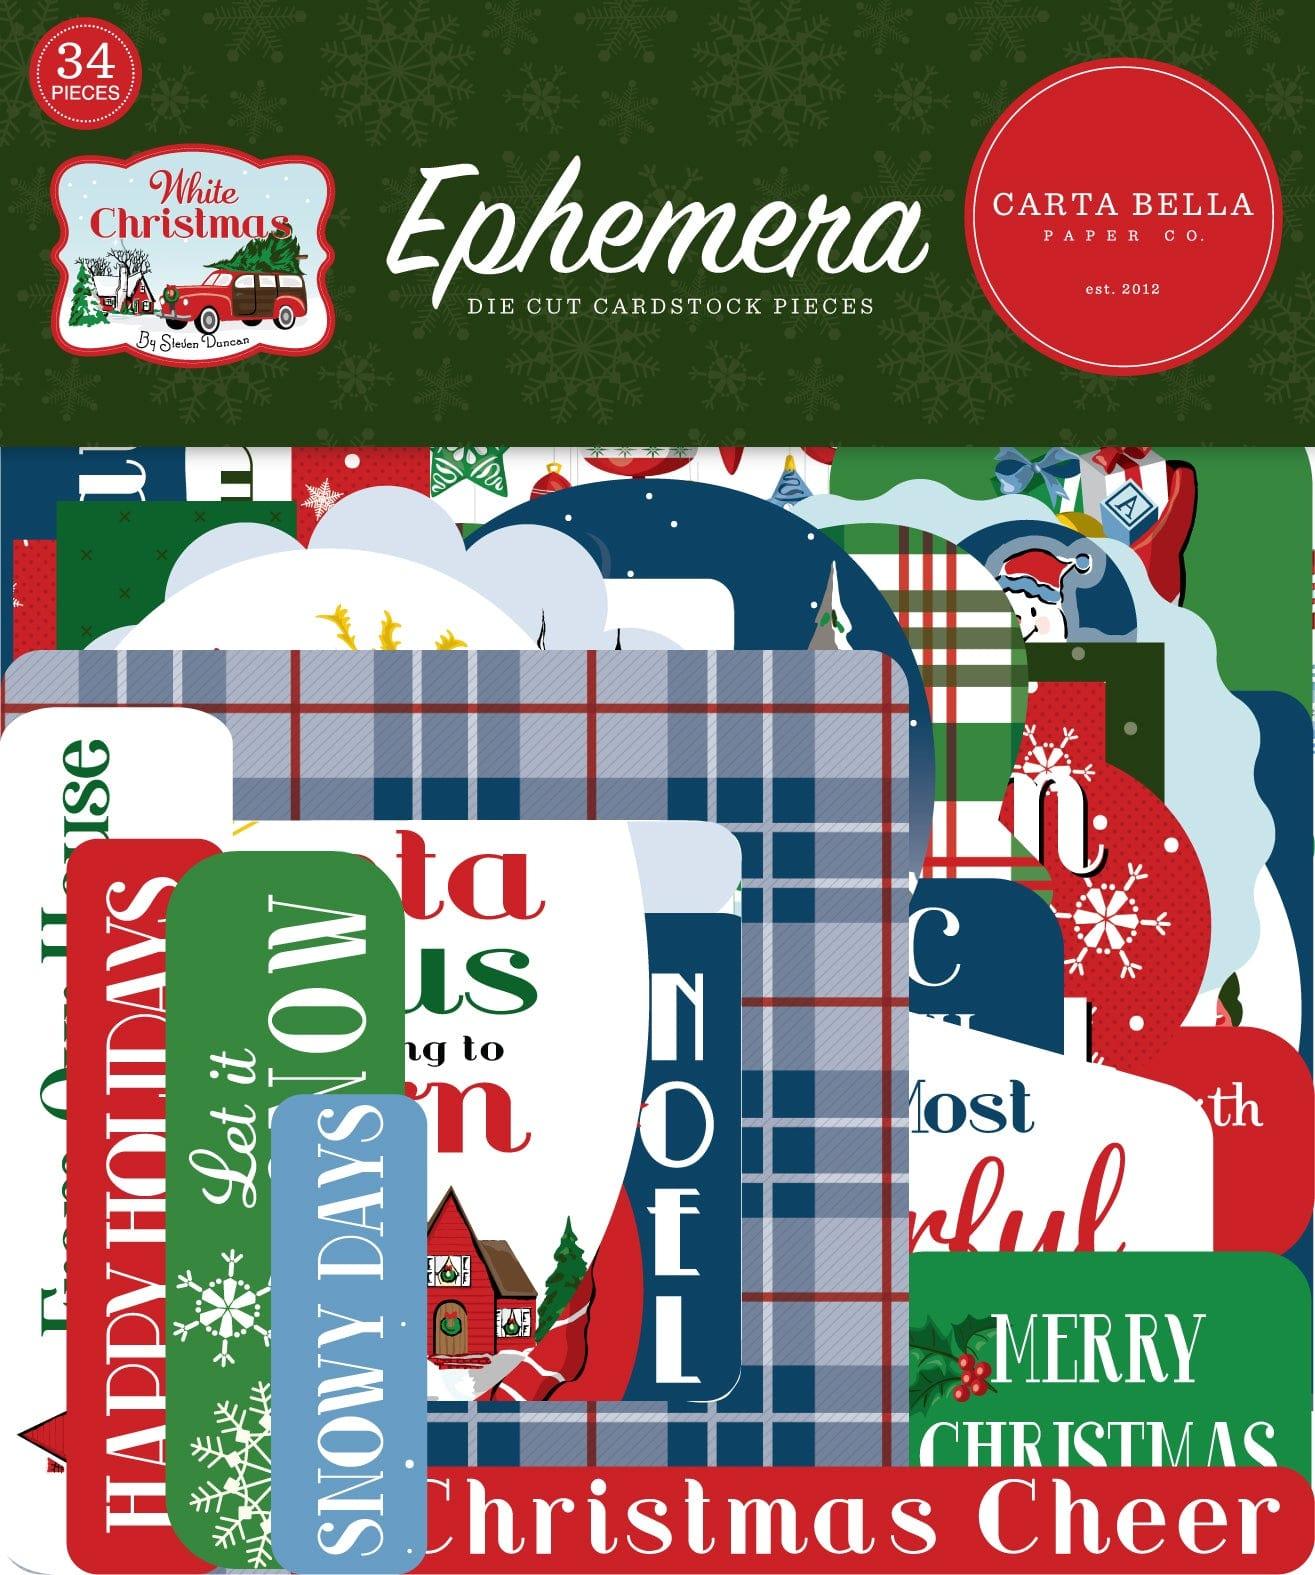 White Christmas Collection 5 x 5 Scrapbook Ephemera Die Cuts by Carta Bella - Scrapbook Supply Companies